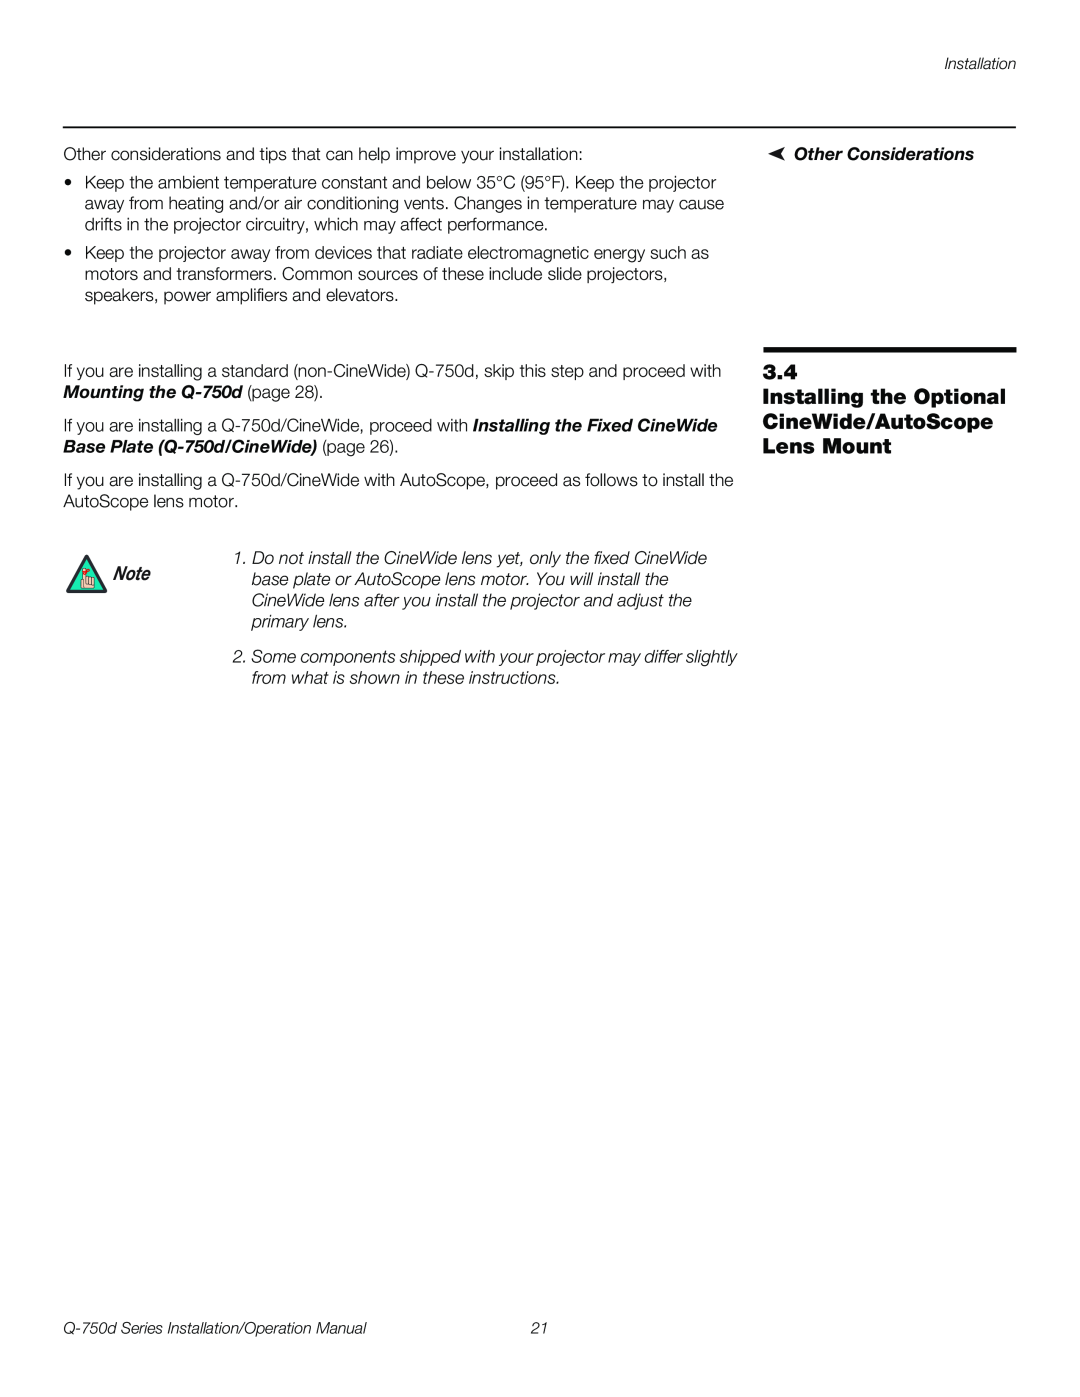 Runco Q-750D operation manual Other Considerations 